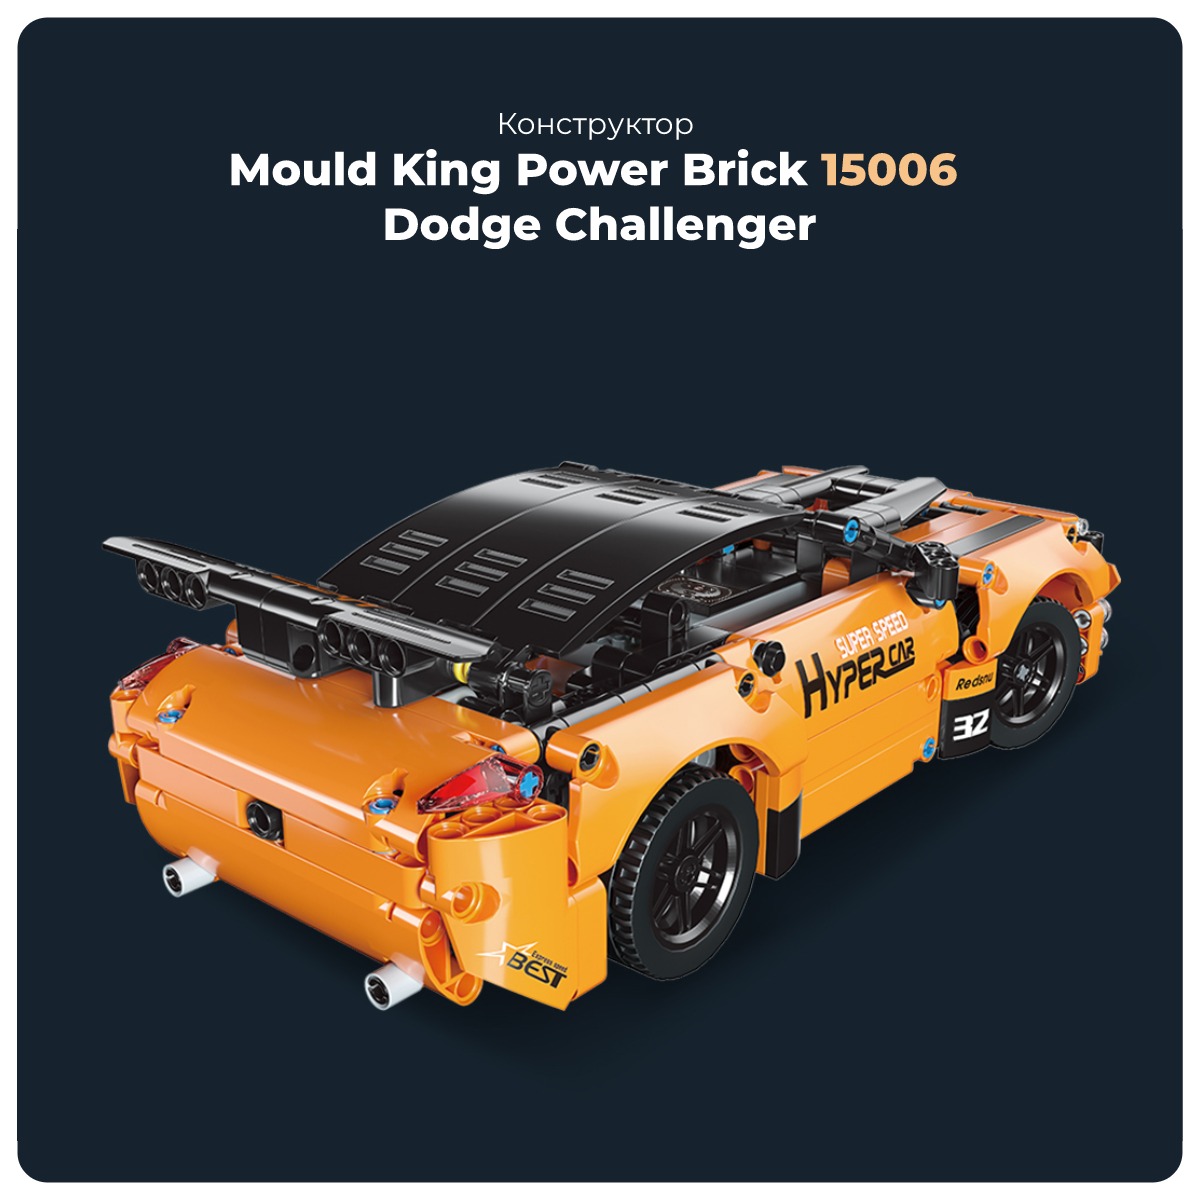 Mould-King-Power-Brick-15006-01